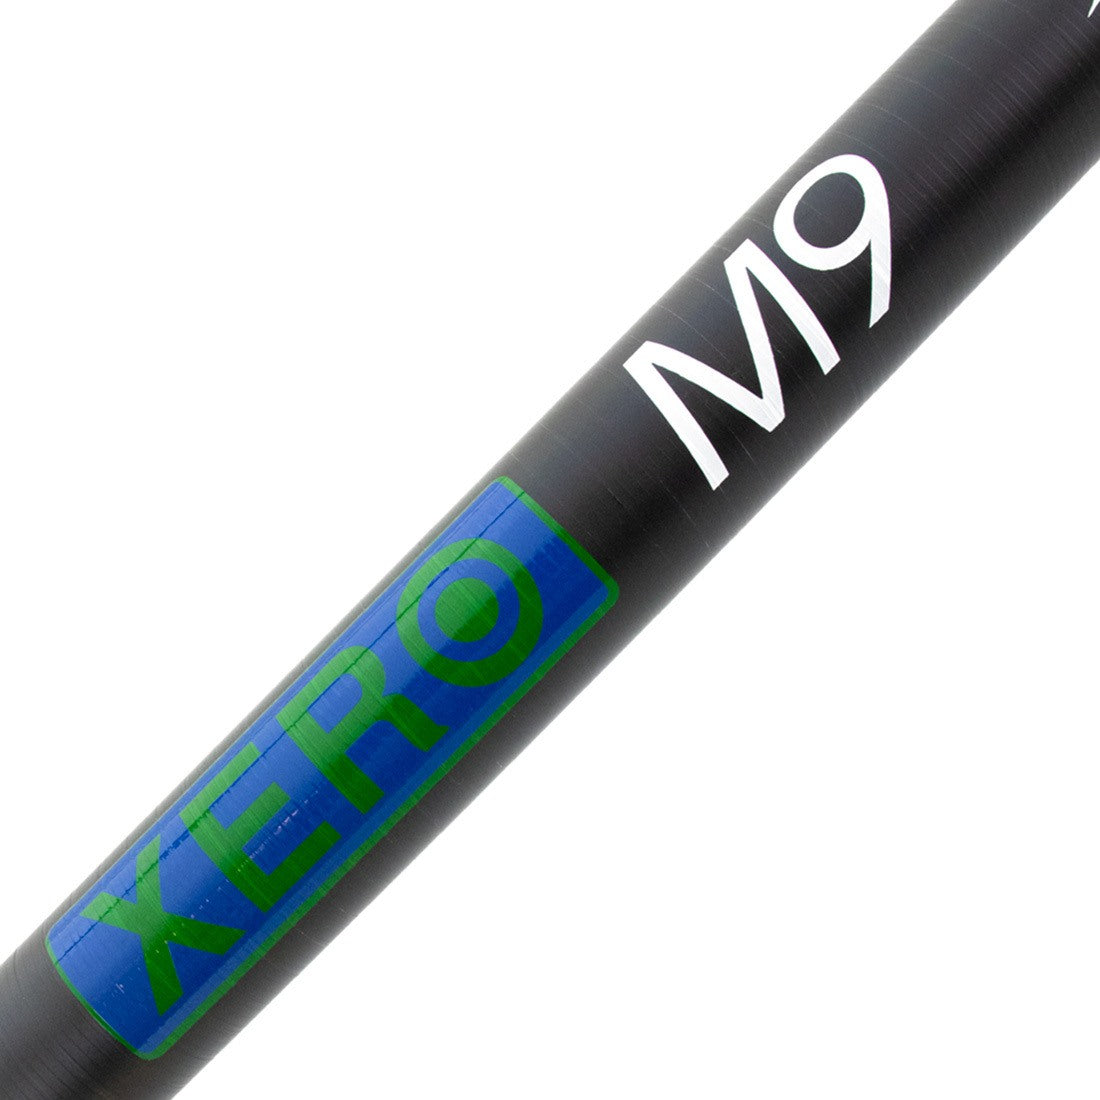 XERO M9 Water Fed Pole - Xero M9 Decal Close-Up View